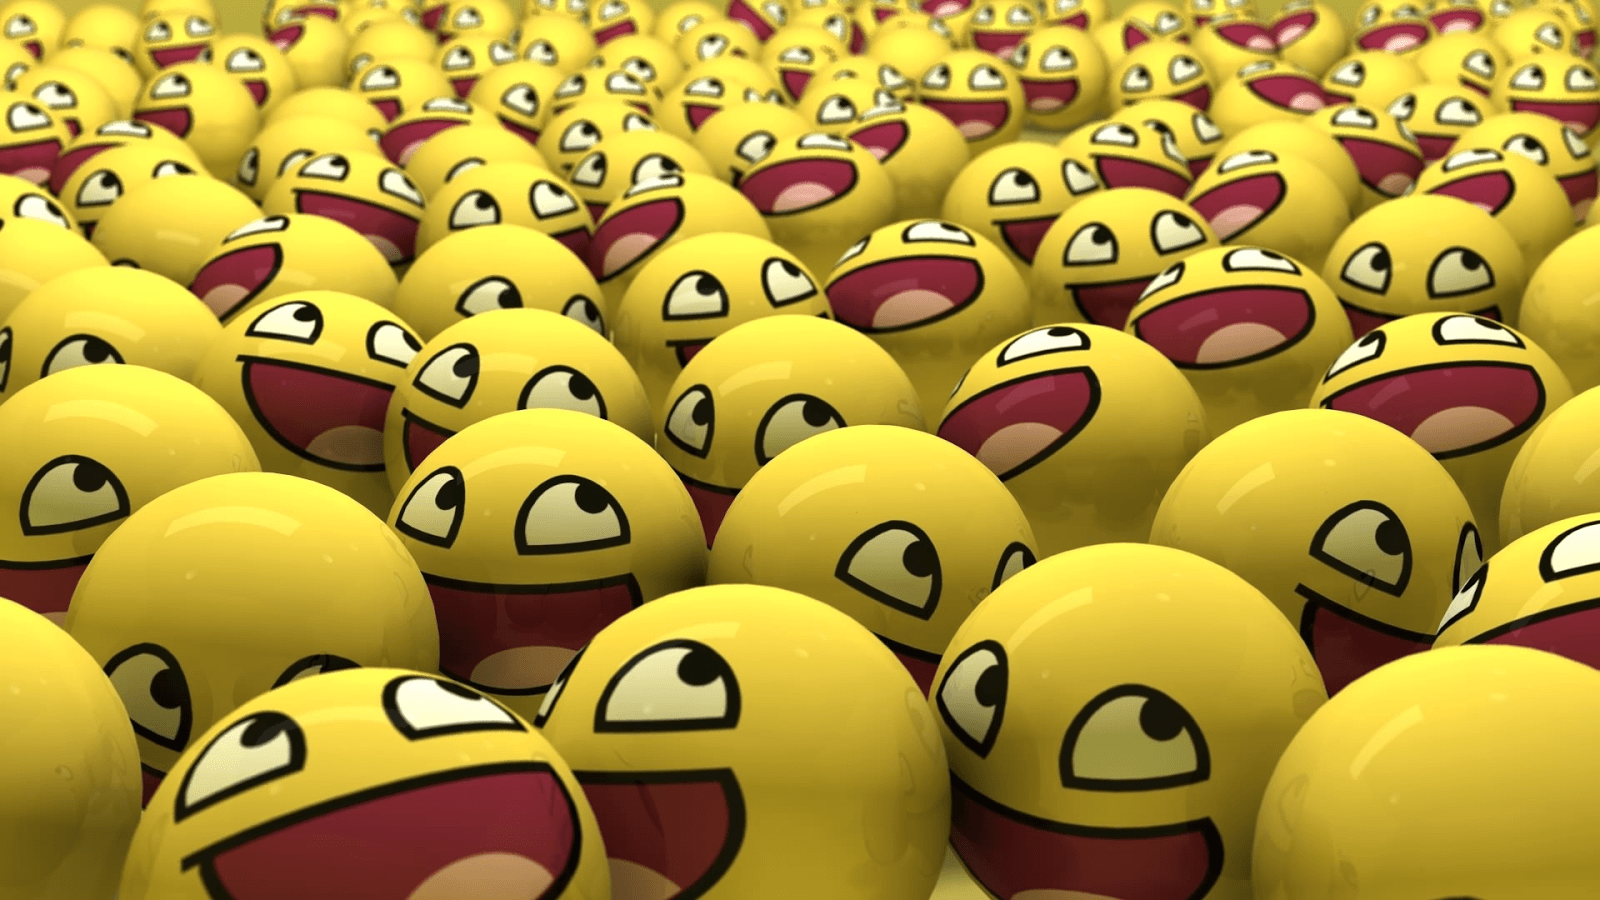 Emoji Face Wallpapers